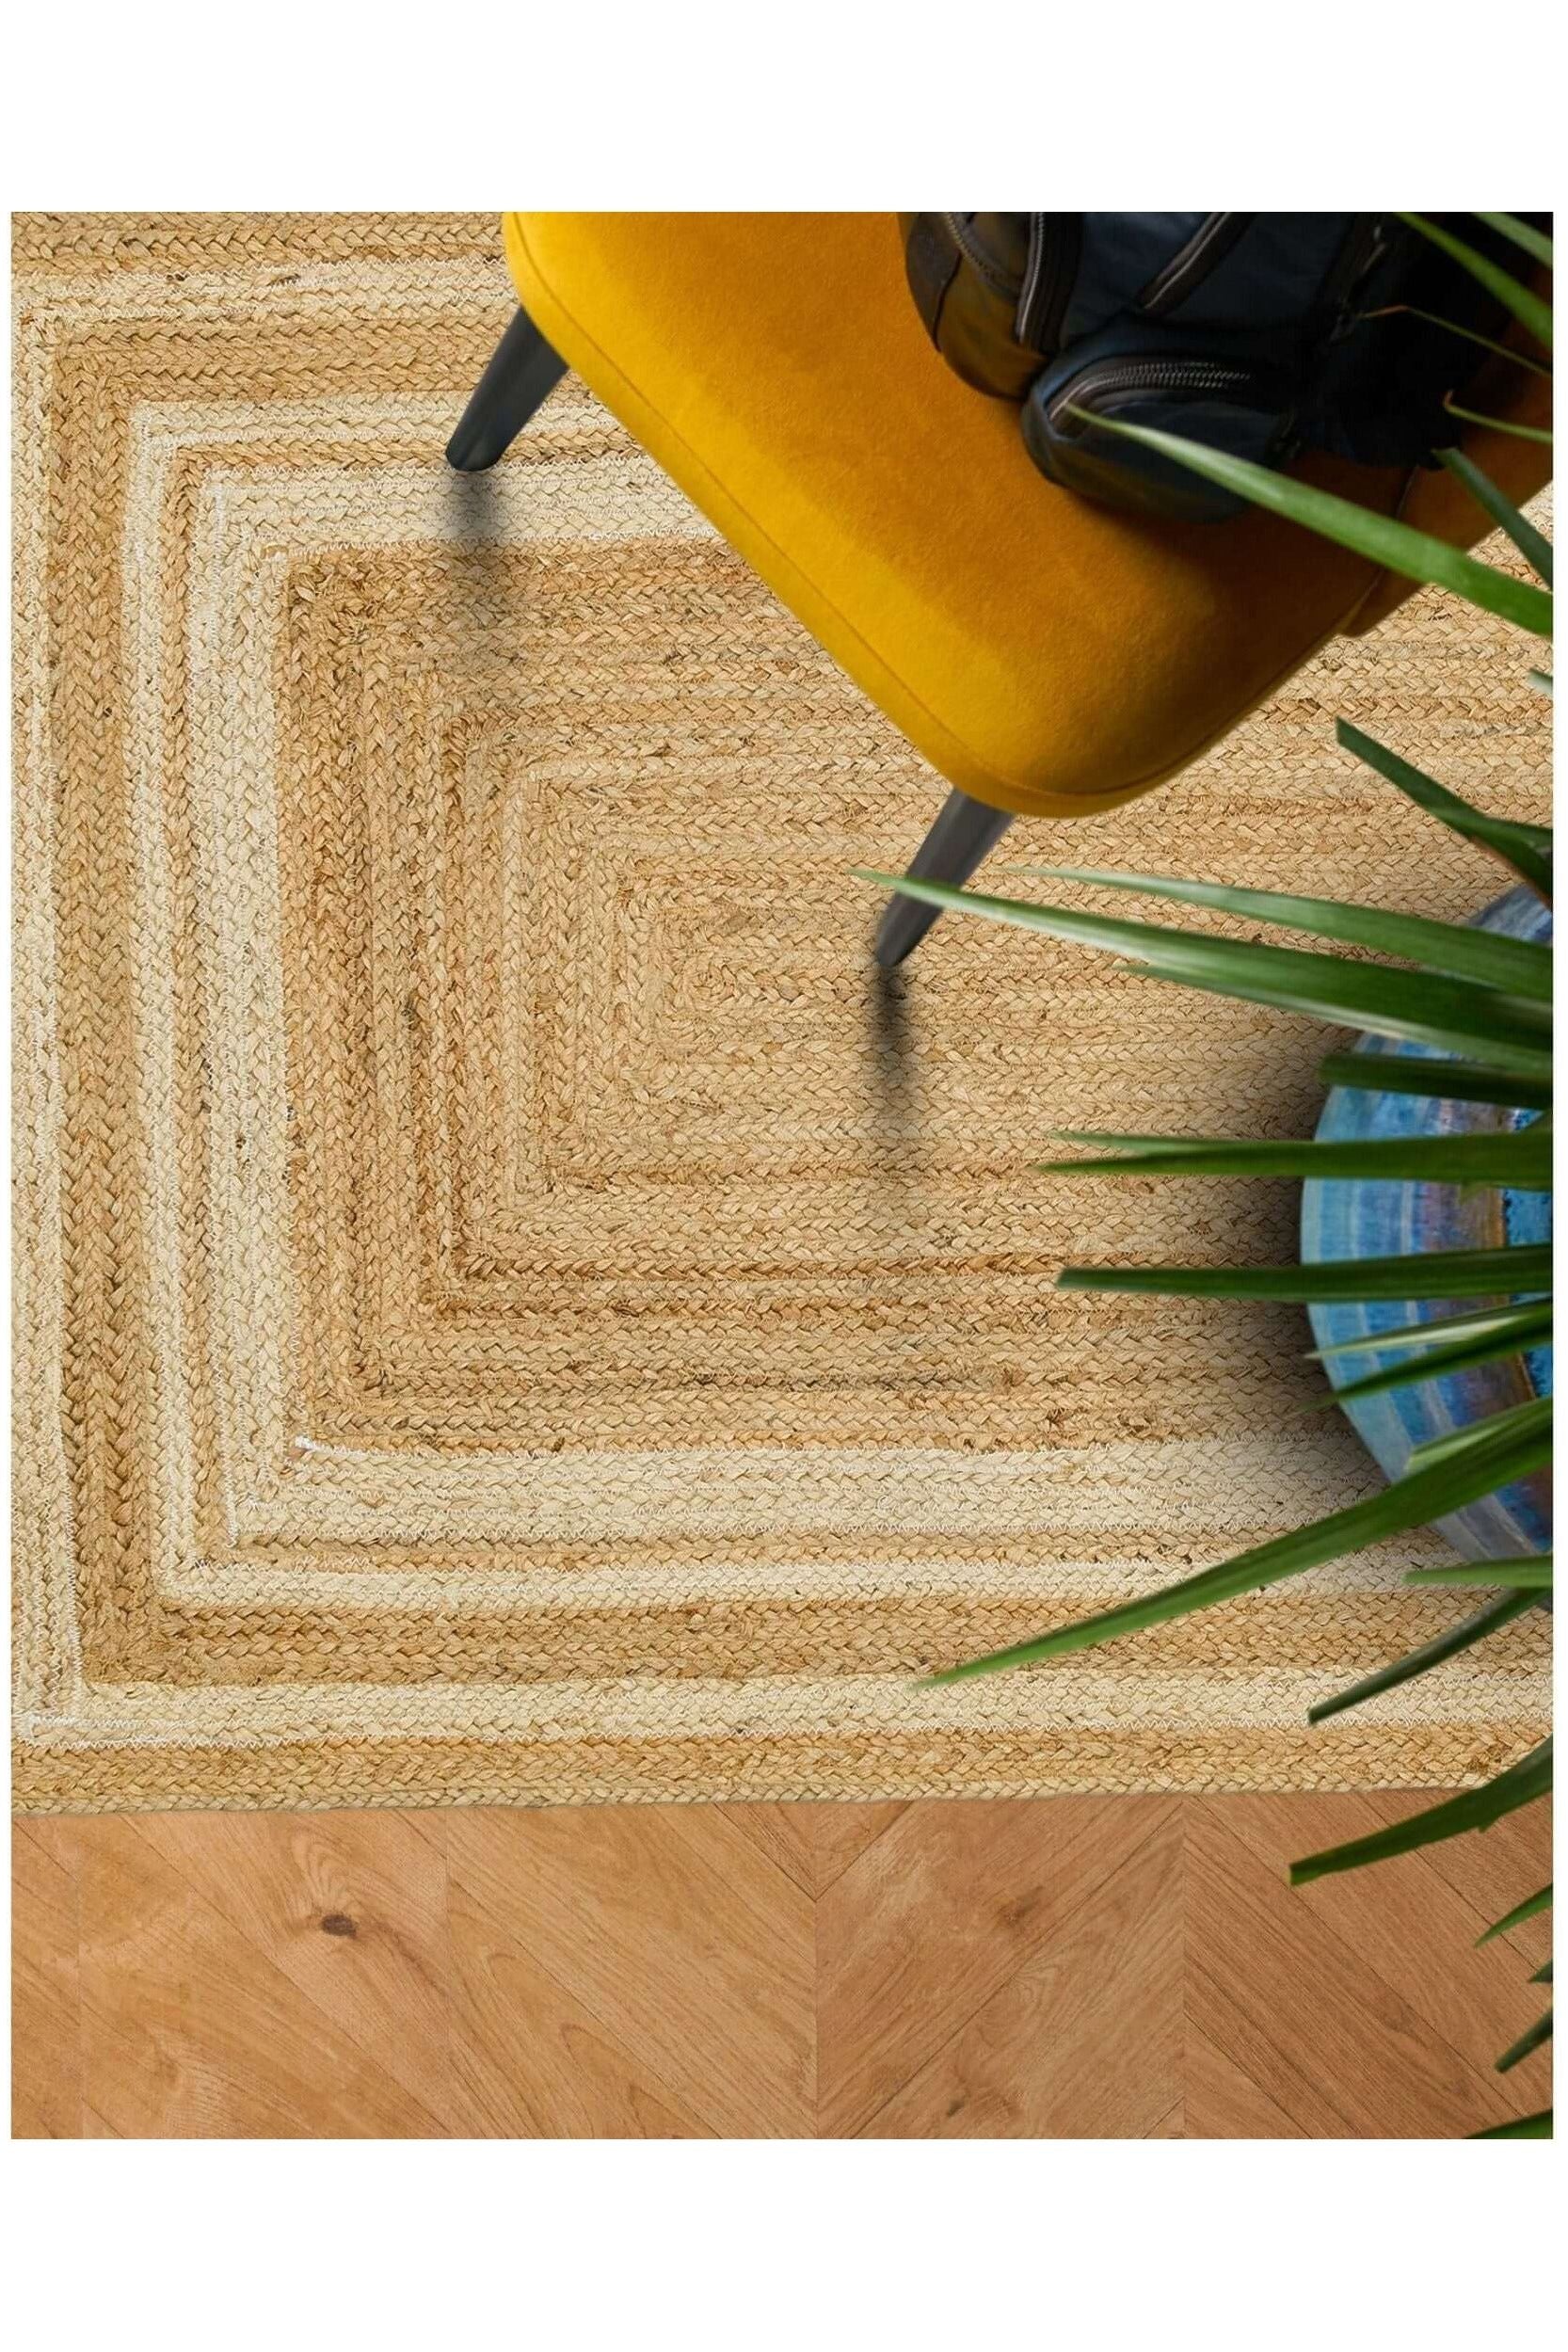 #Turkish_Carpets_Rugs# #Modern_Carpets# #Abrash_Carpets#Ech 10 Natural White Xw